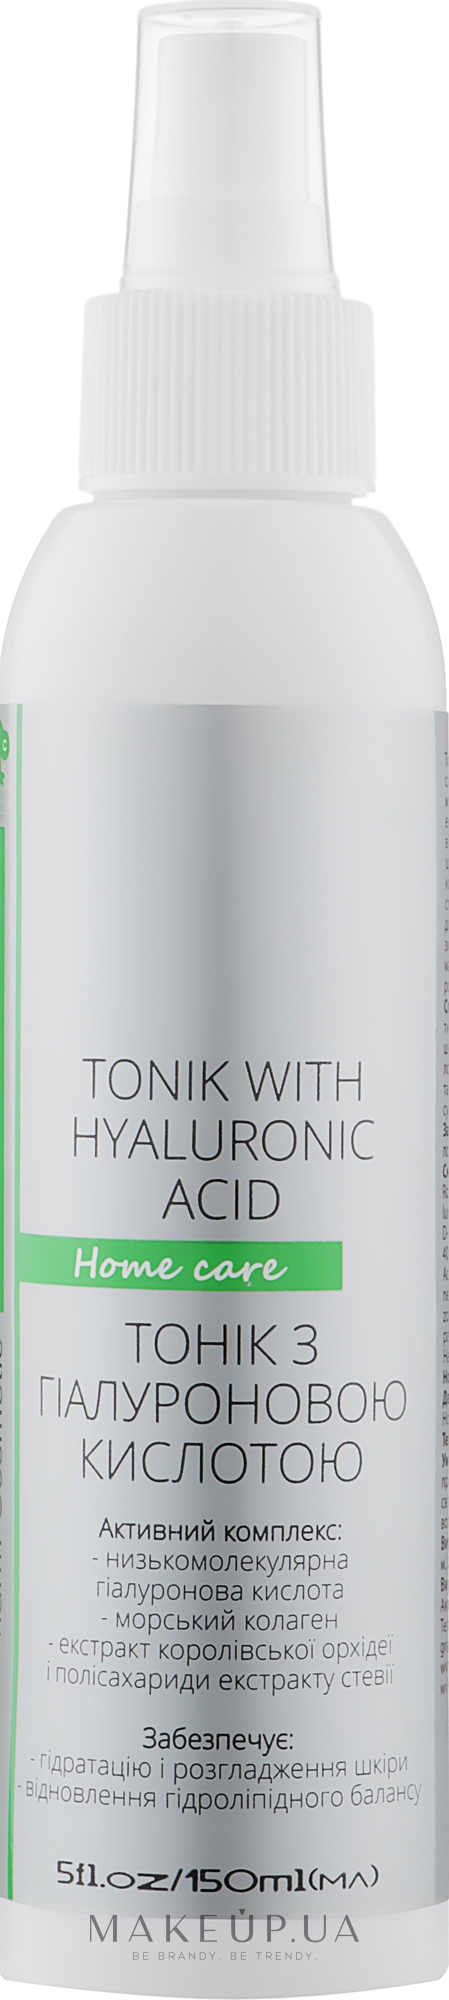 Тоник для лица с гиалуроновой кислотой - Green Pharm Cosmetic Tonic With Hyaluronic Acid PH 5,5 — фото 150ml